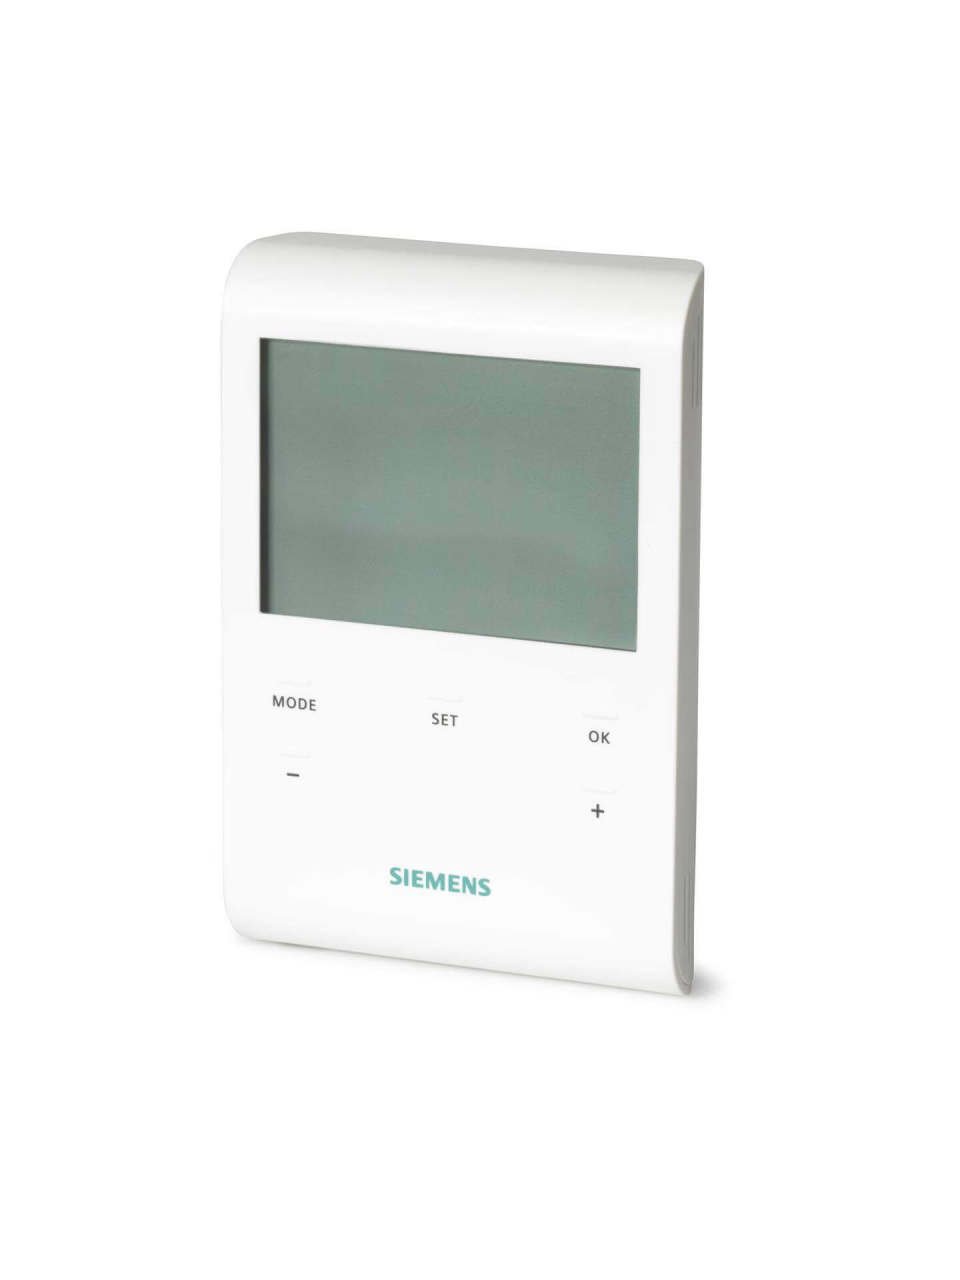 Siemens RDE100.1 Dijital Oda Termostatı